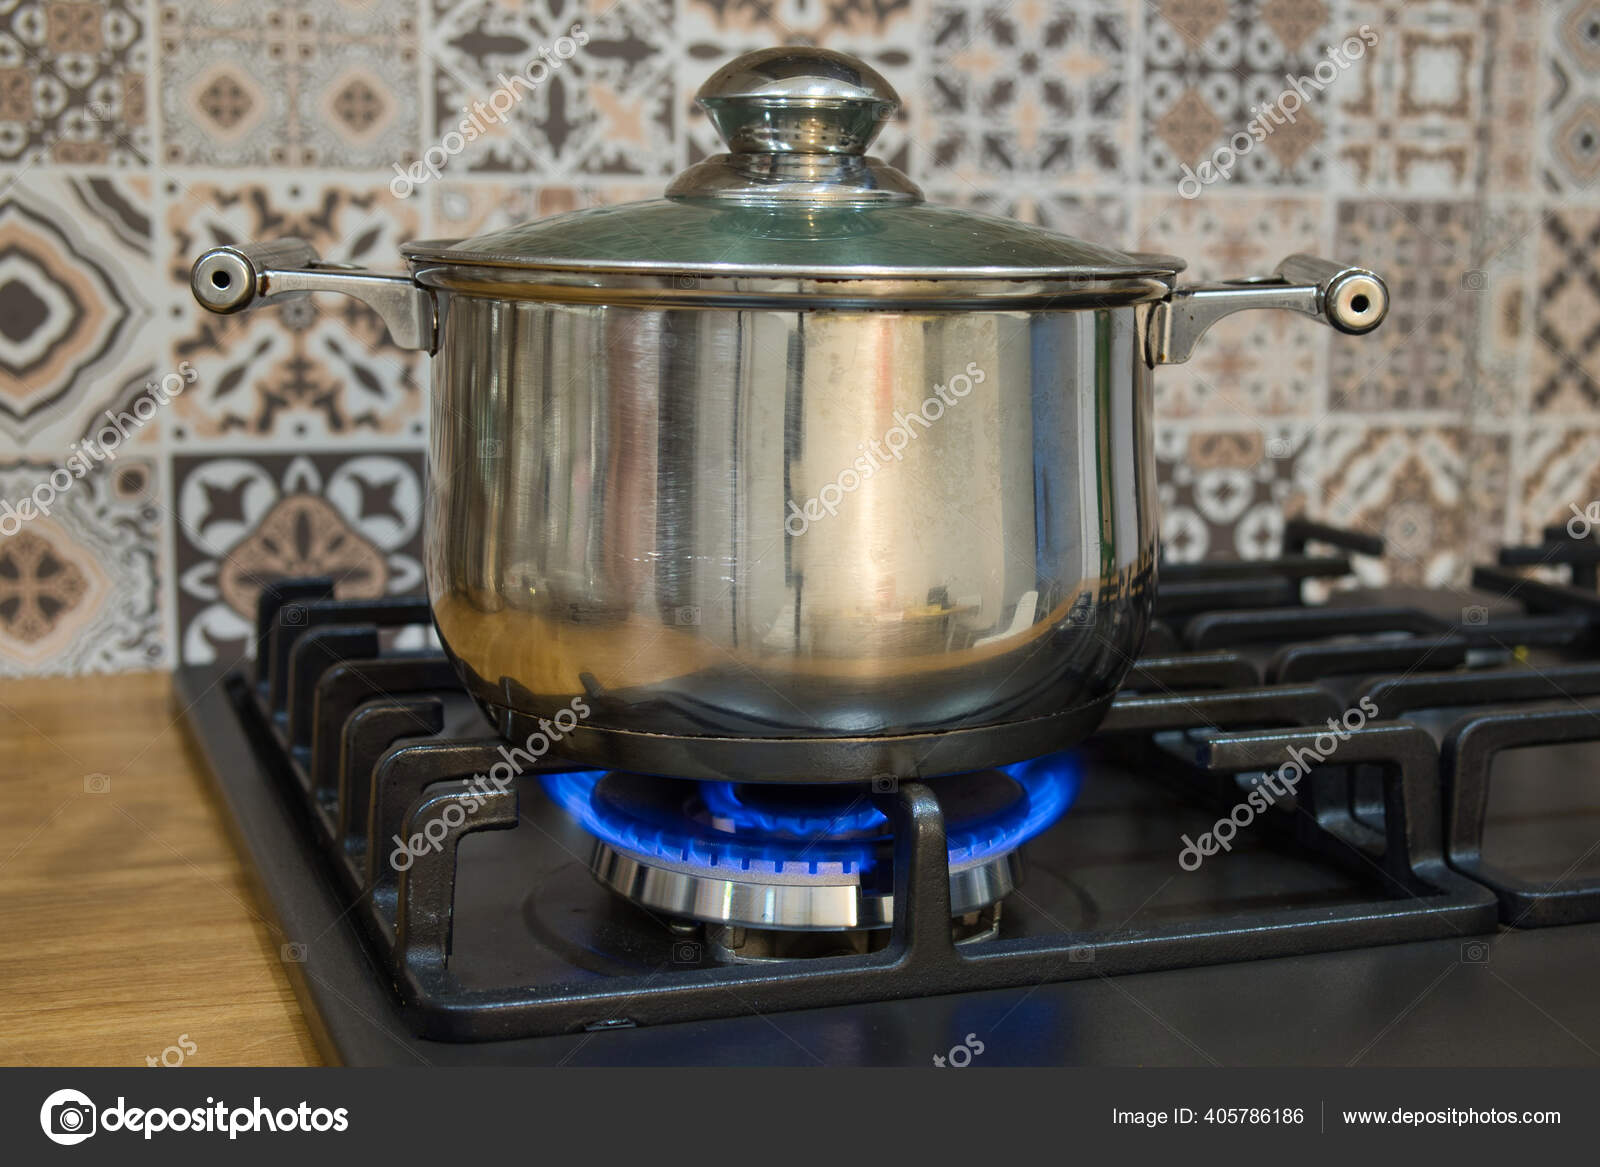 https://st4.depositphotos.com/37349688/40578/i/1600/depositphotos_405786186-stock-photo-cooking-on-a-gas-stove.jpg